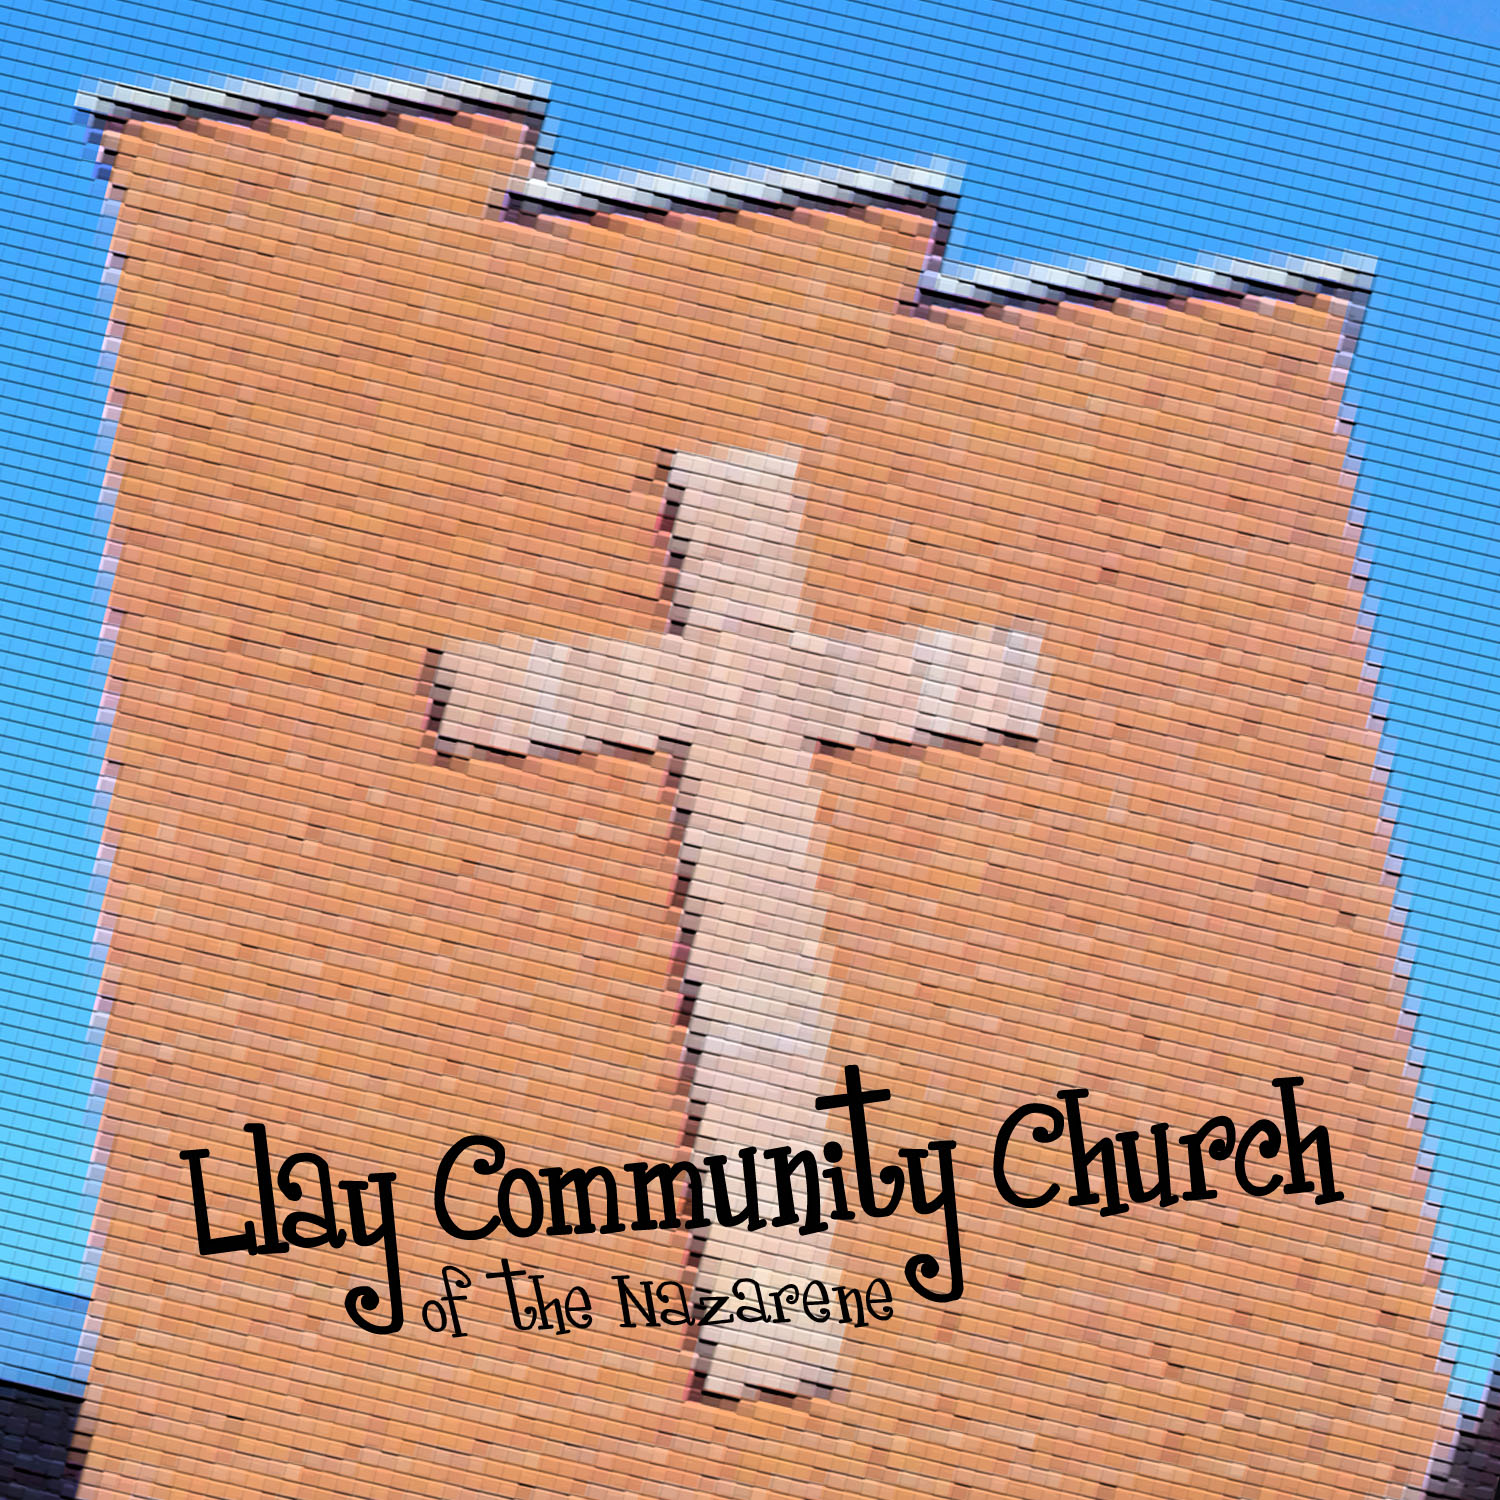 Llay Community Church of the Nazarene